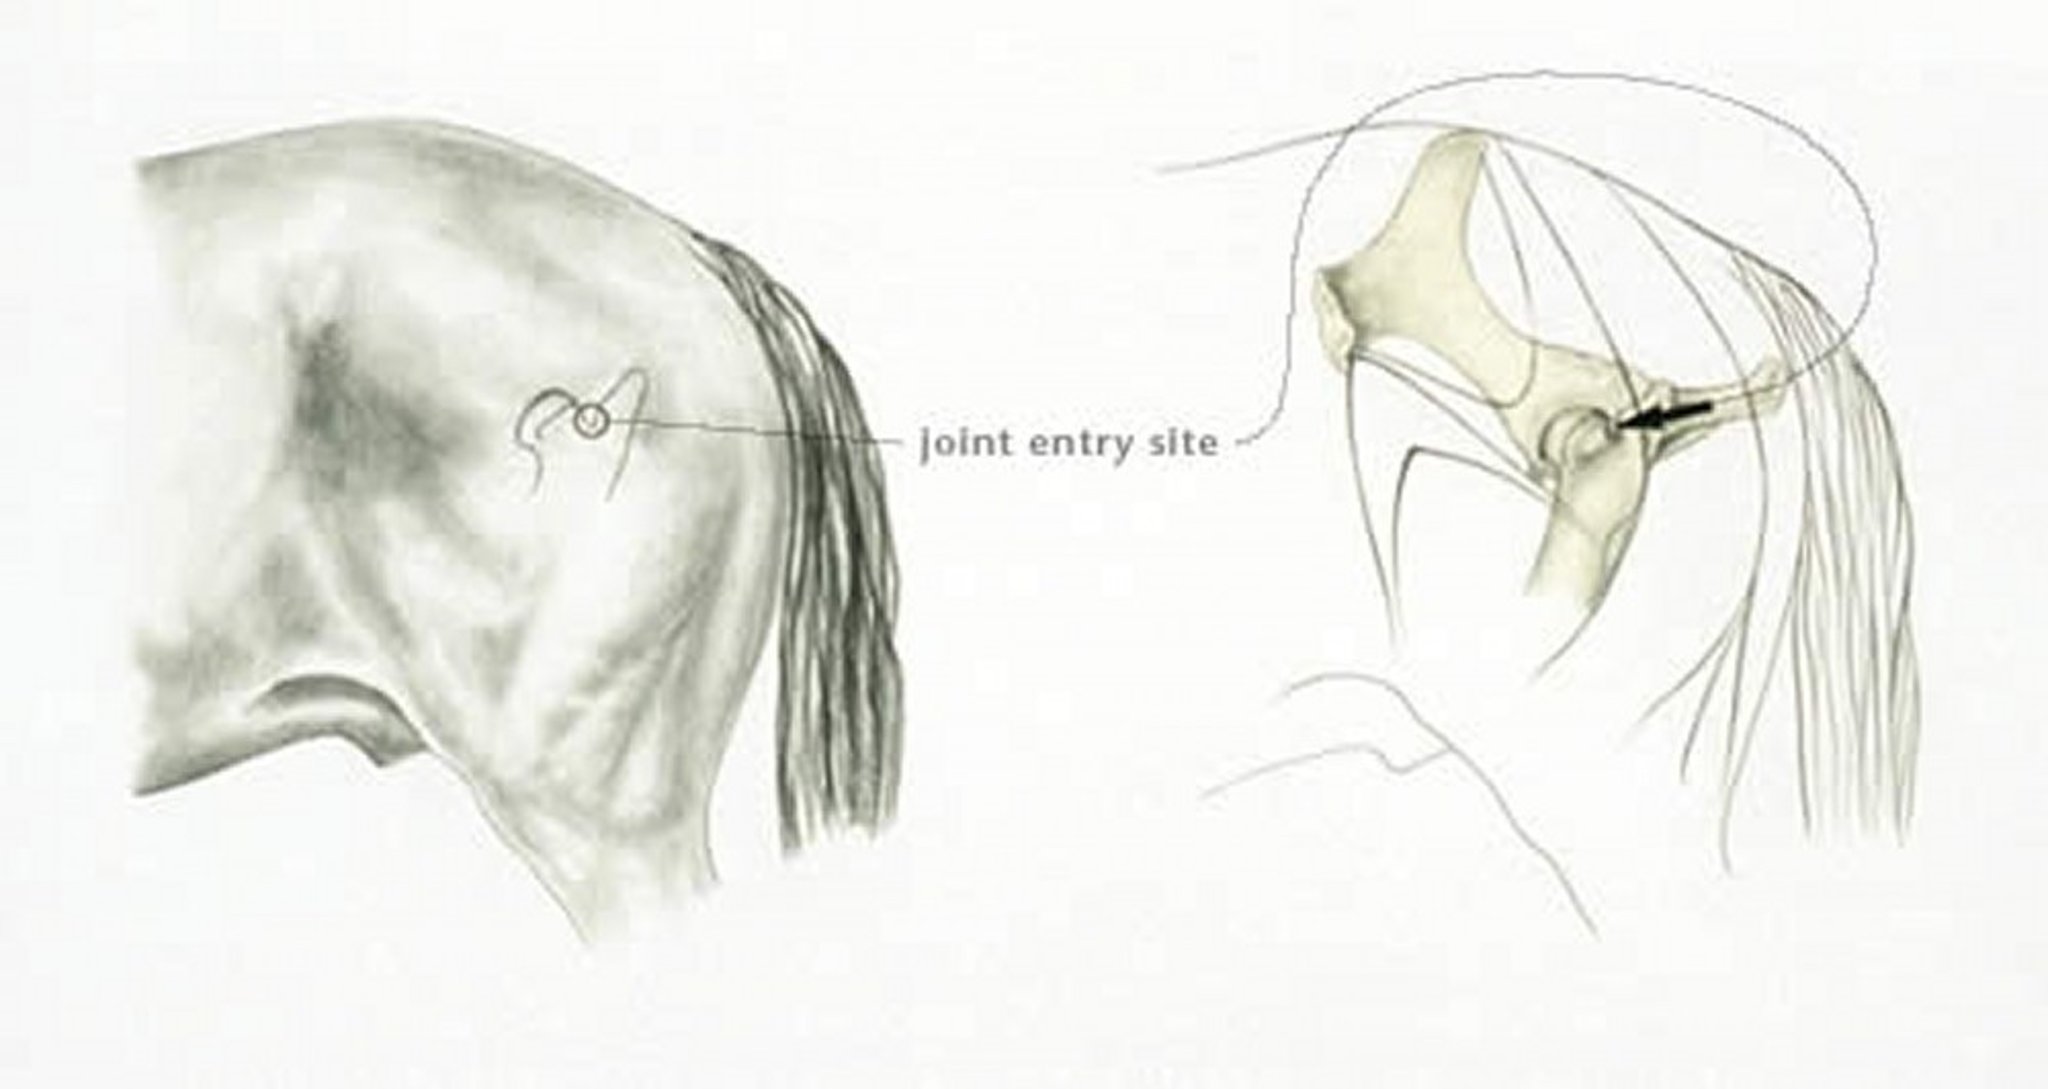 Arthroscopy joint entry site, hip, horse